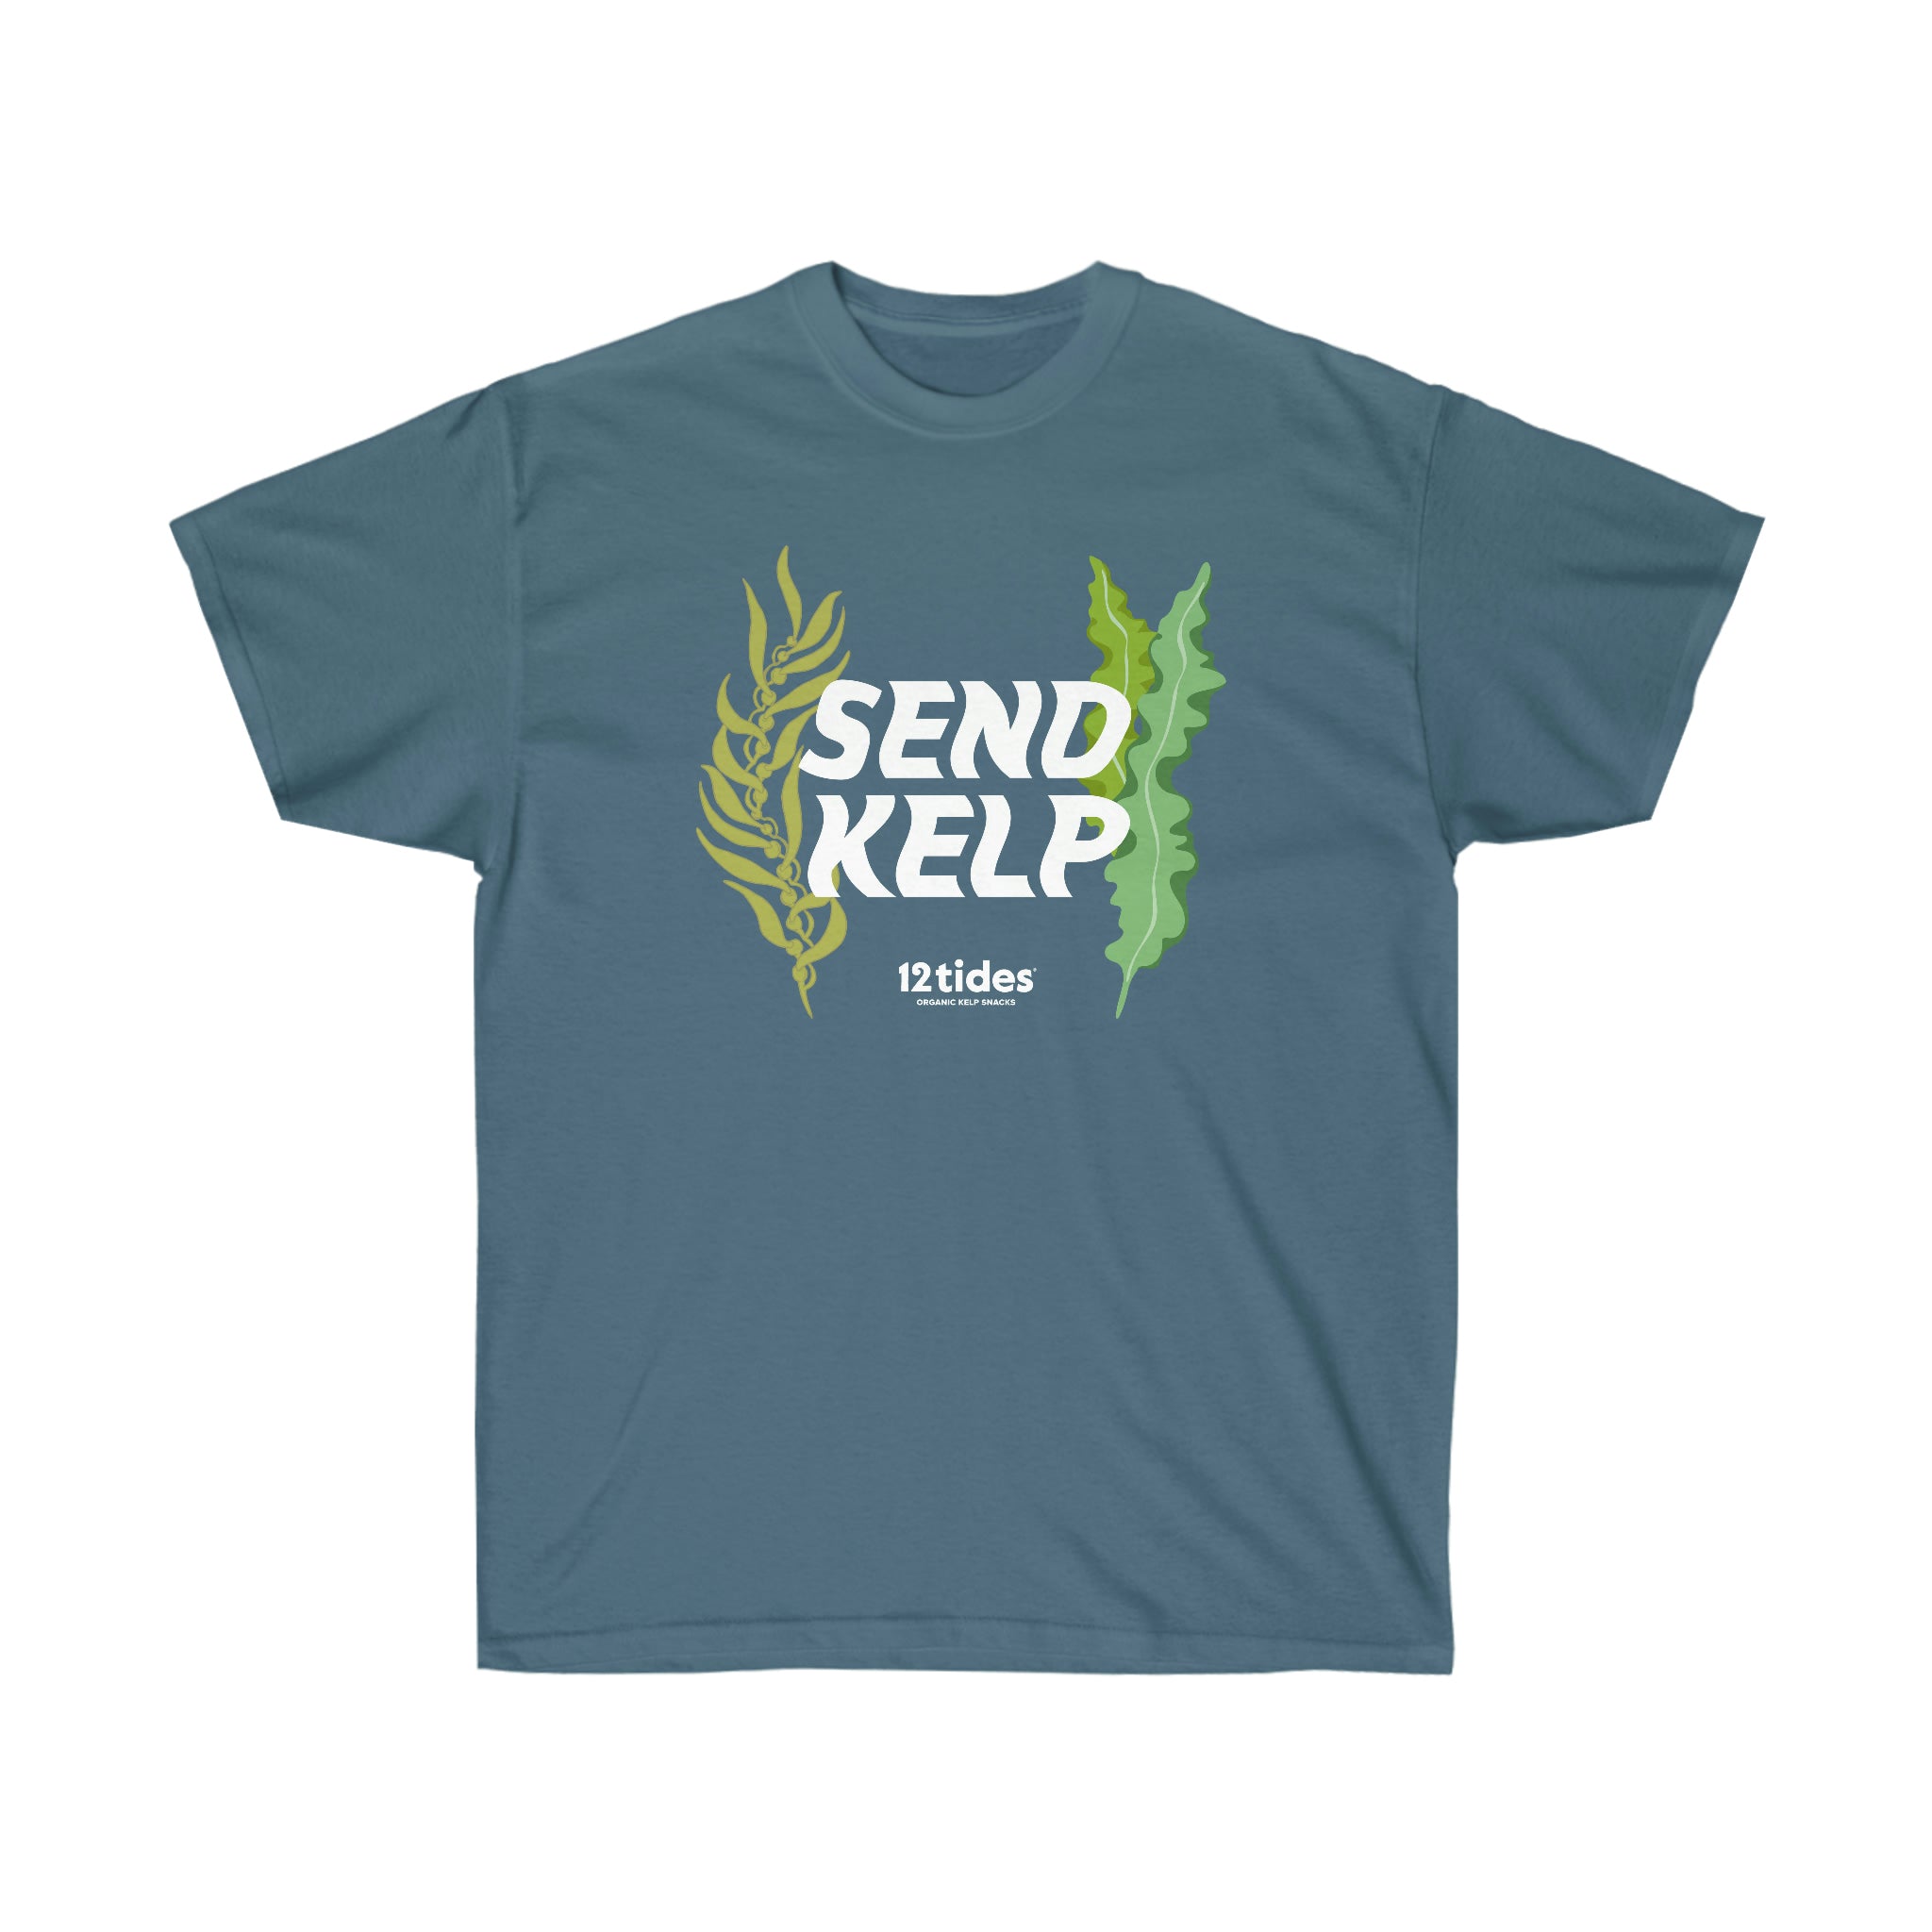 Send Kelp Tee - Front of shirt